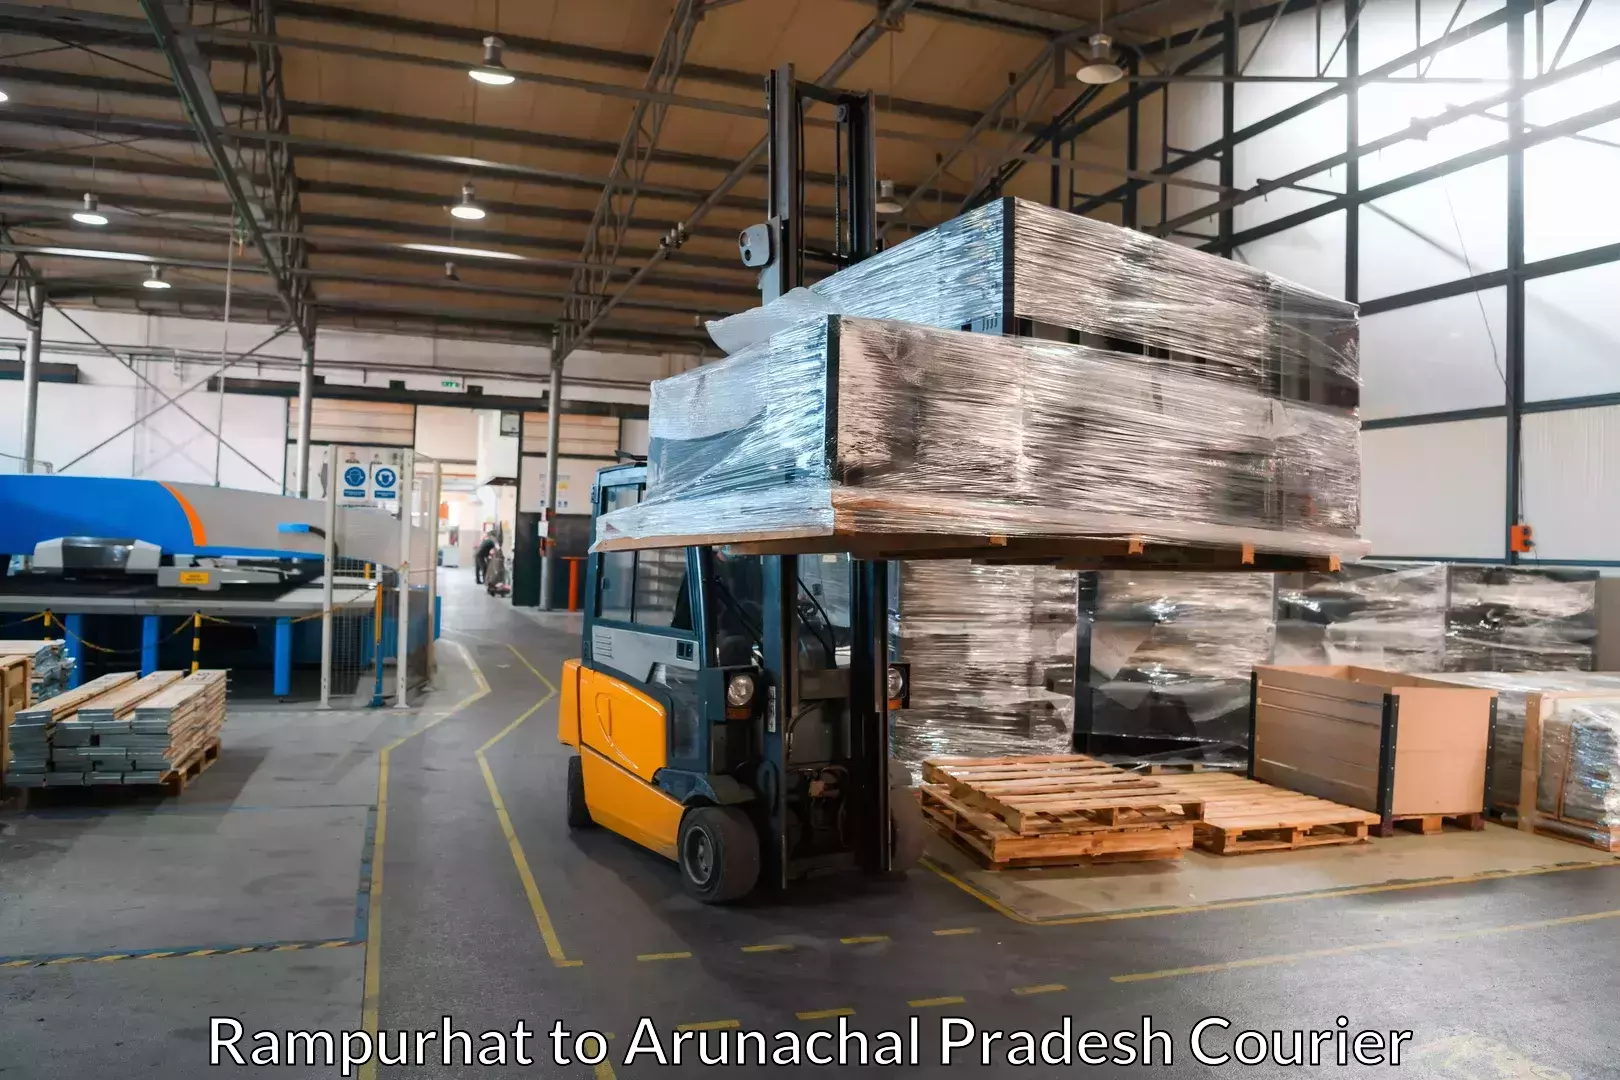 Trusted moving company Rampurhat to Arunachal Pradesh